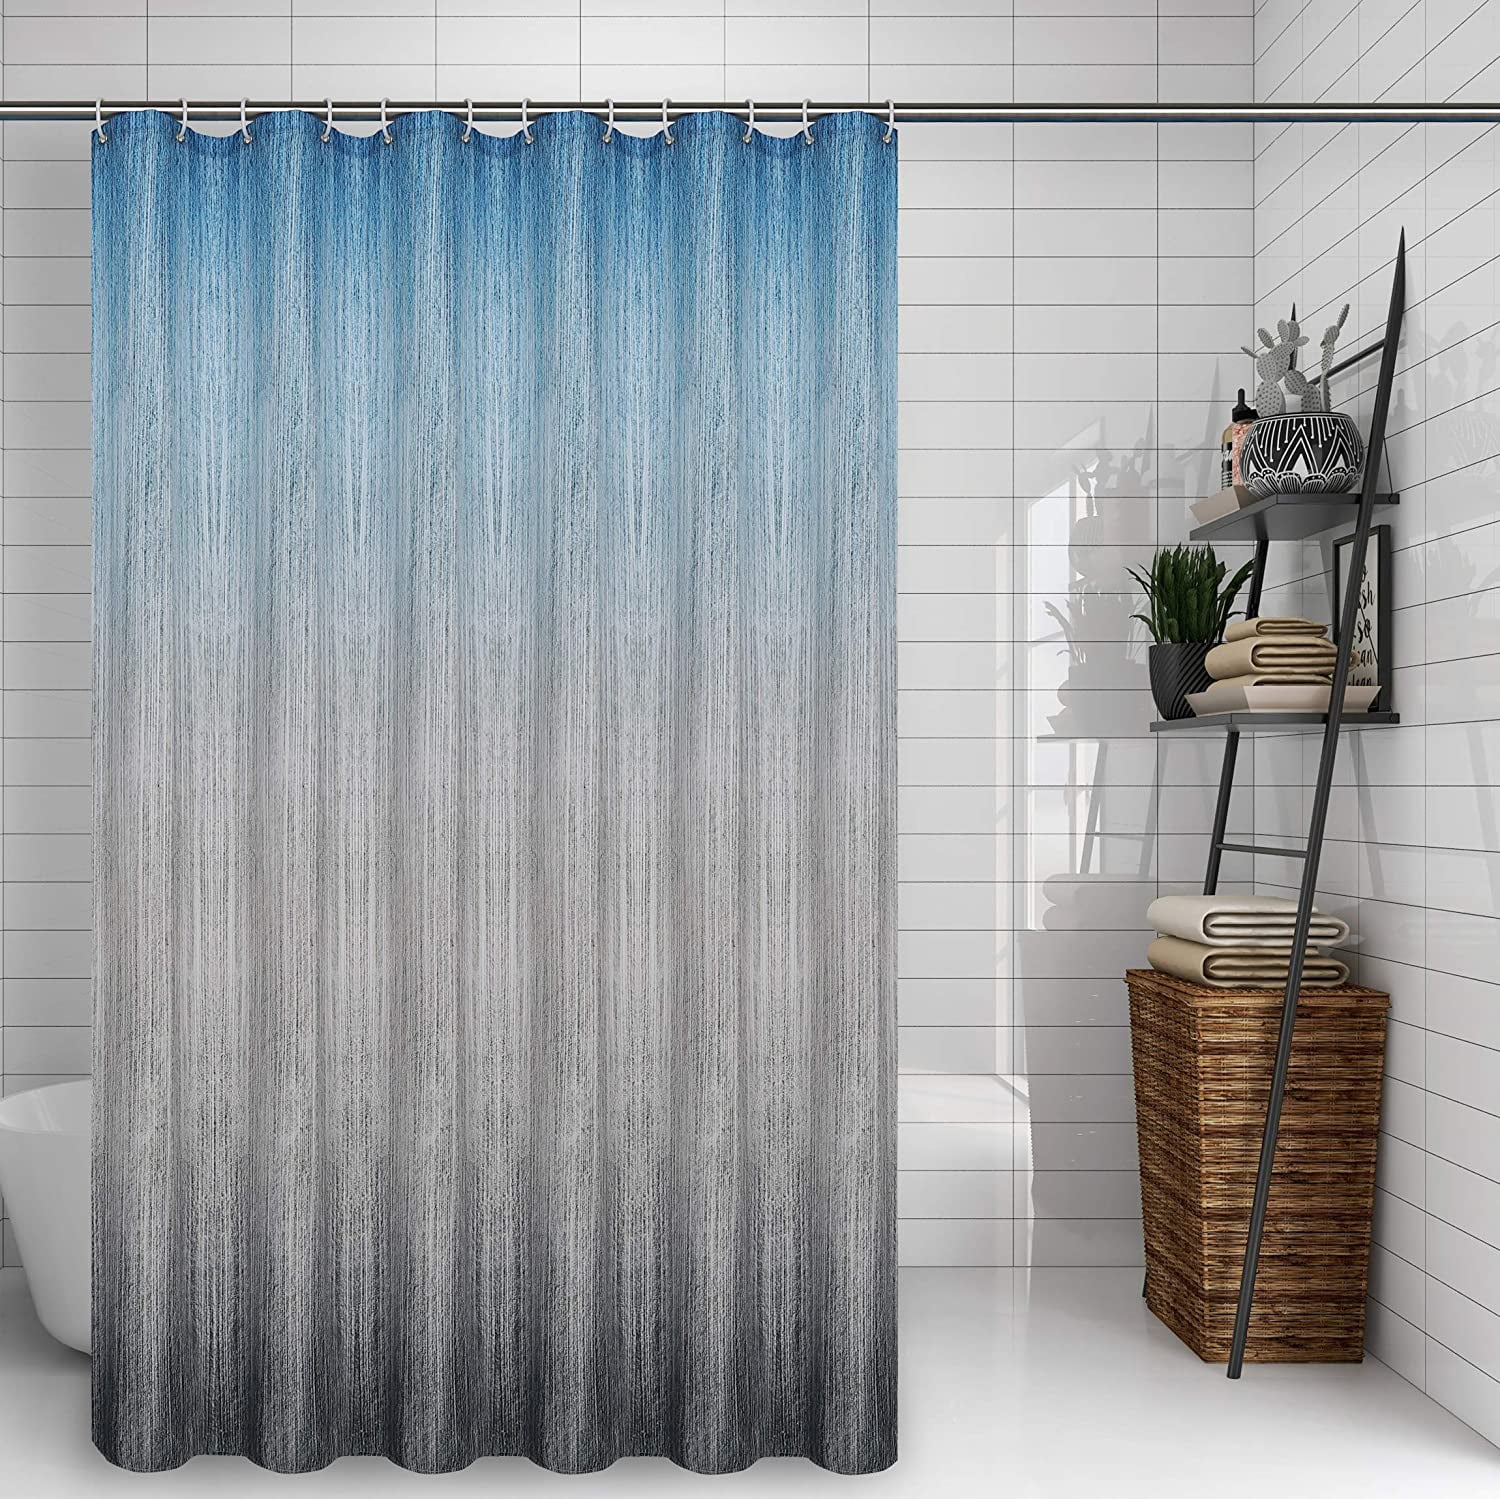 HOT 3D WaterprooModern Shower Bathroom Curtain Extra Long Wide with Hooks Rings 